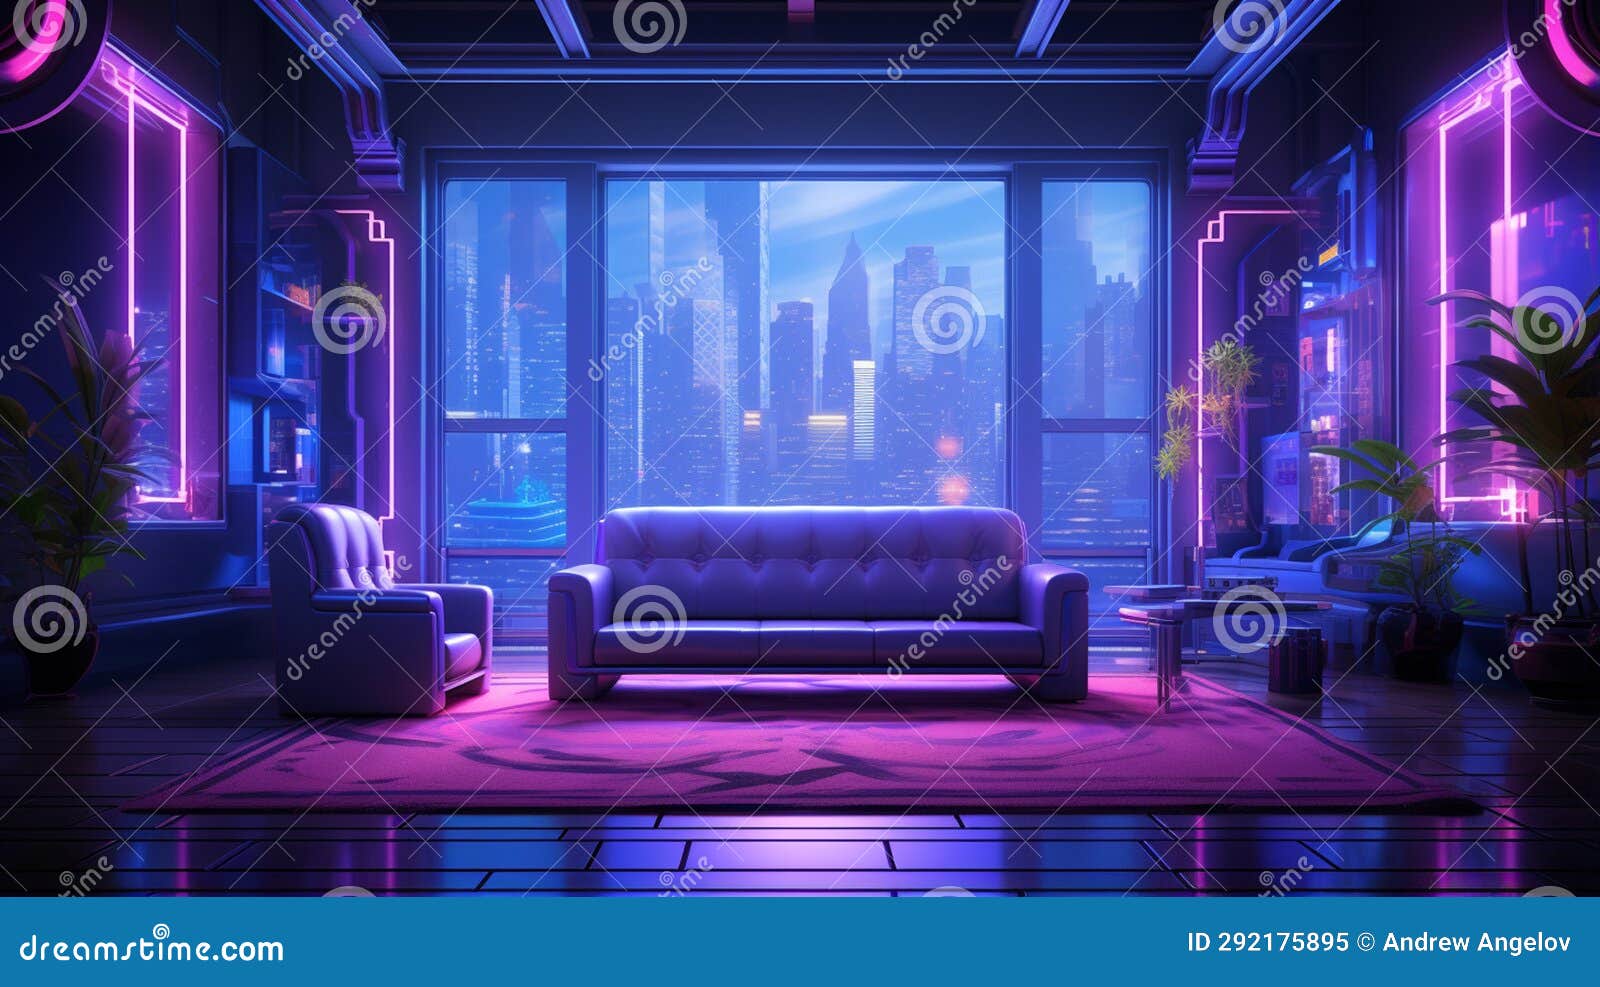 Retro Cyber Sci Fi Neon Glowing Laser Purple Blue Lights Futuristic Bar ...